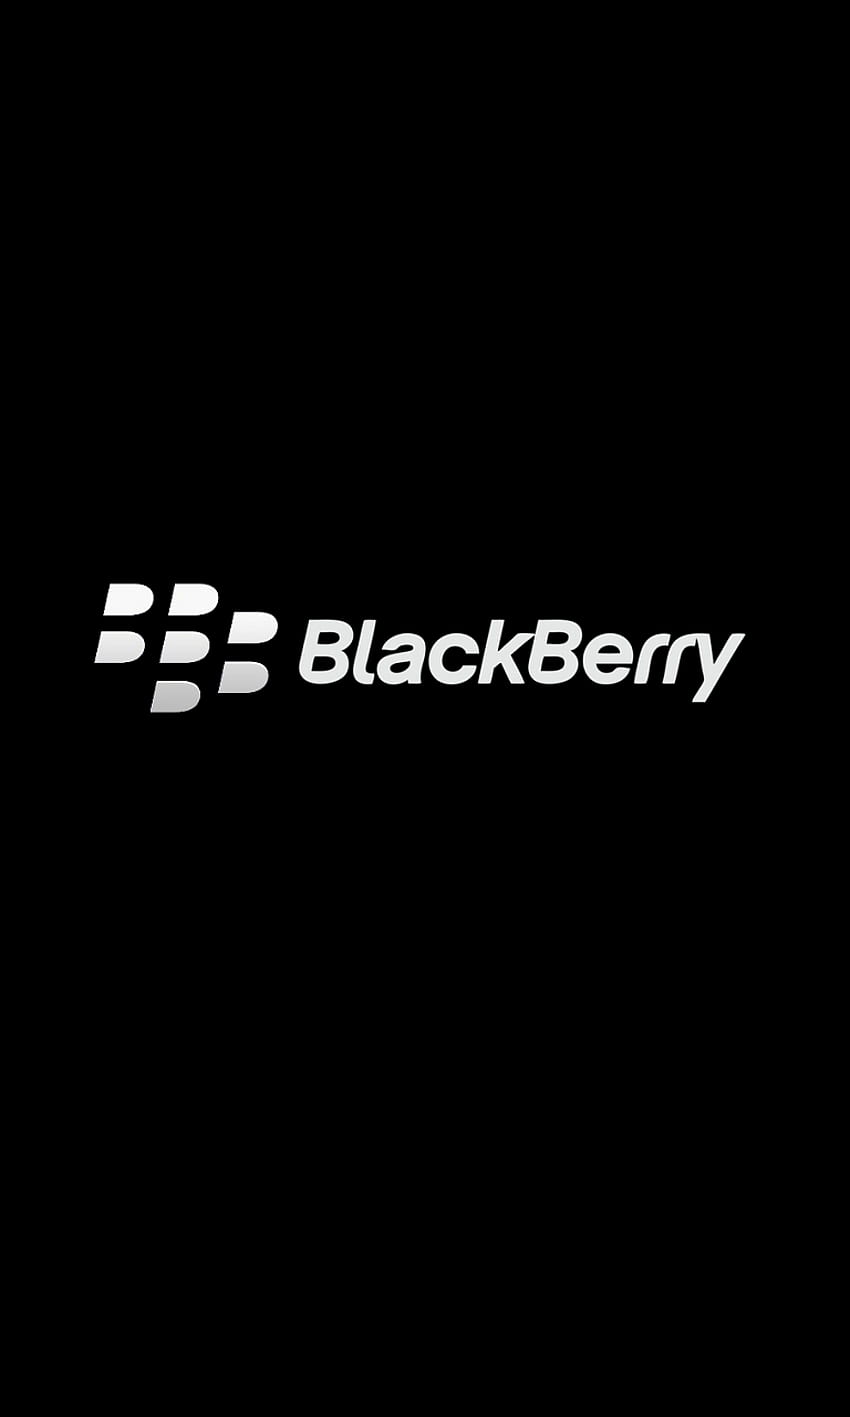 Logo Blackberry, BlackBerry Android wallpaper ponsel HD